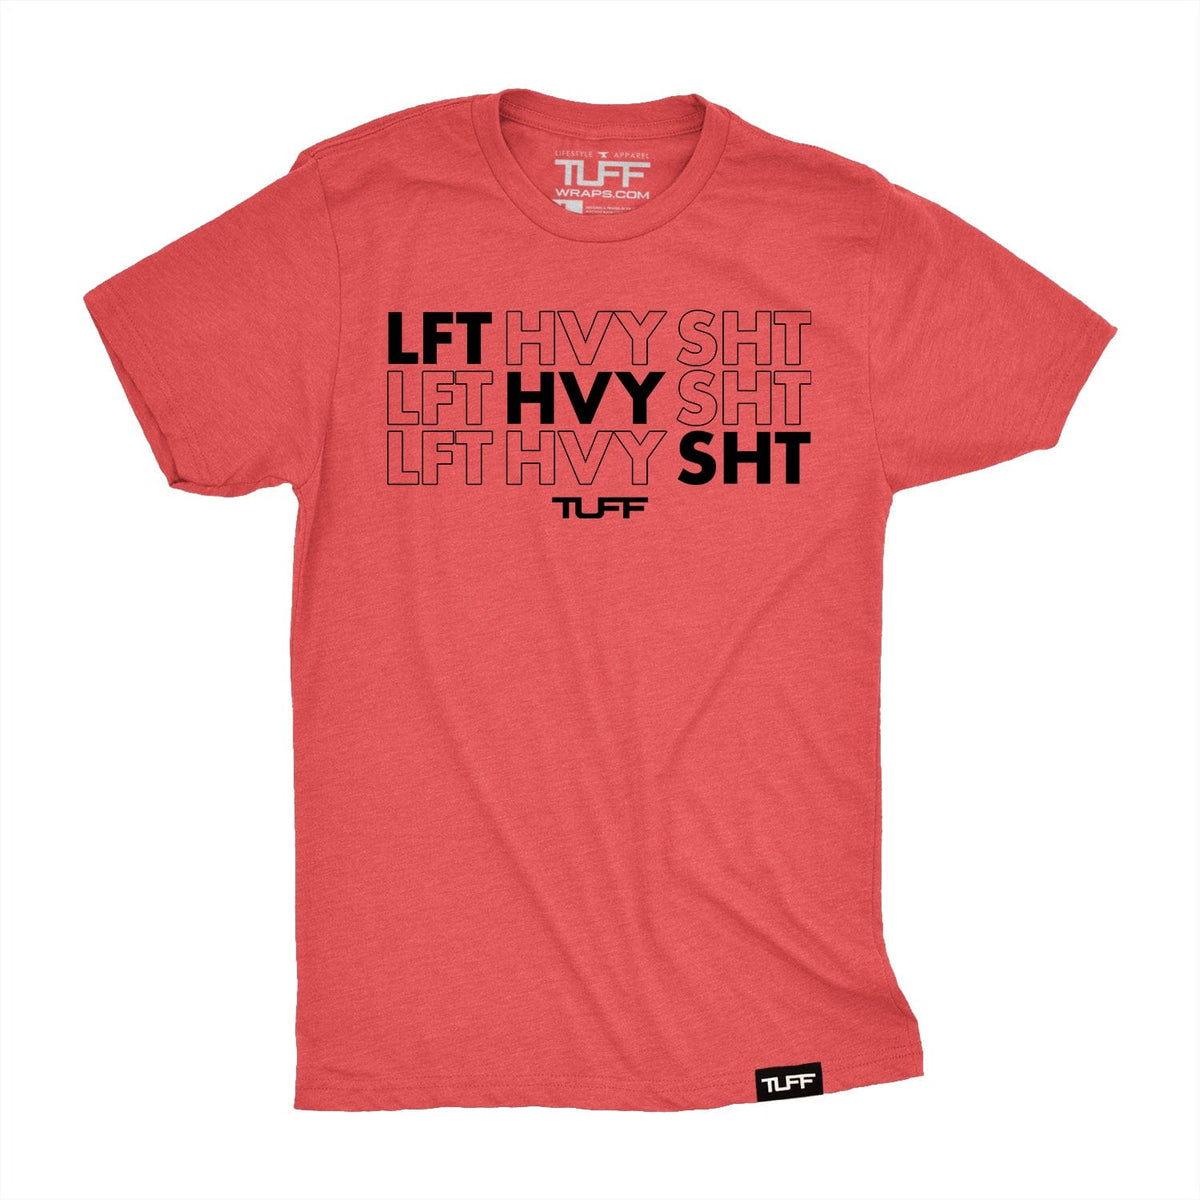 LFT HVY SHT Tee S / Vintage Red TuffWraps.com